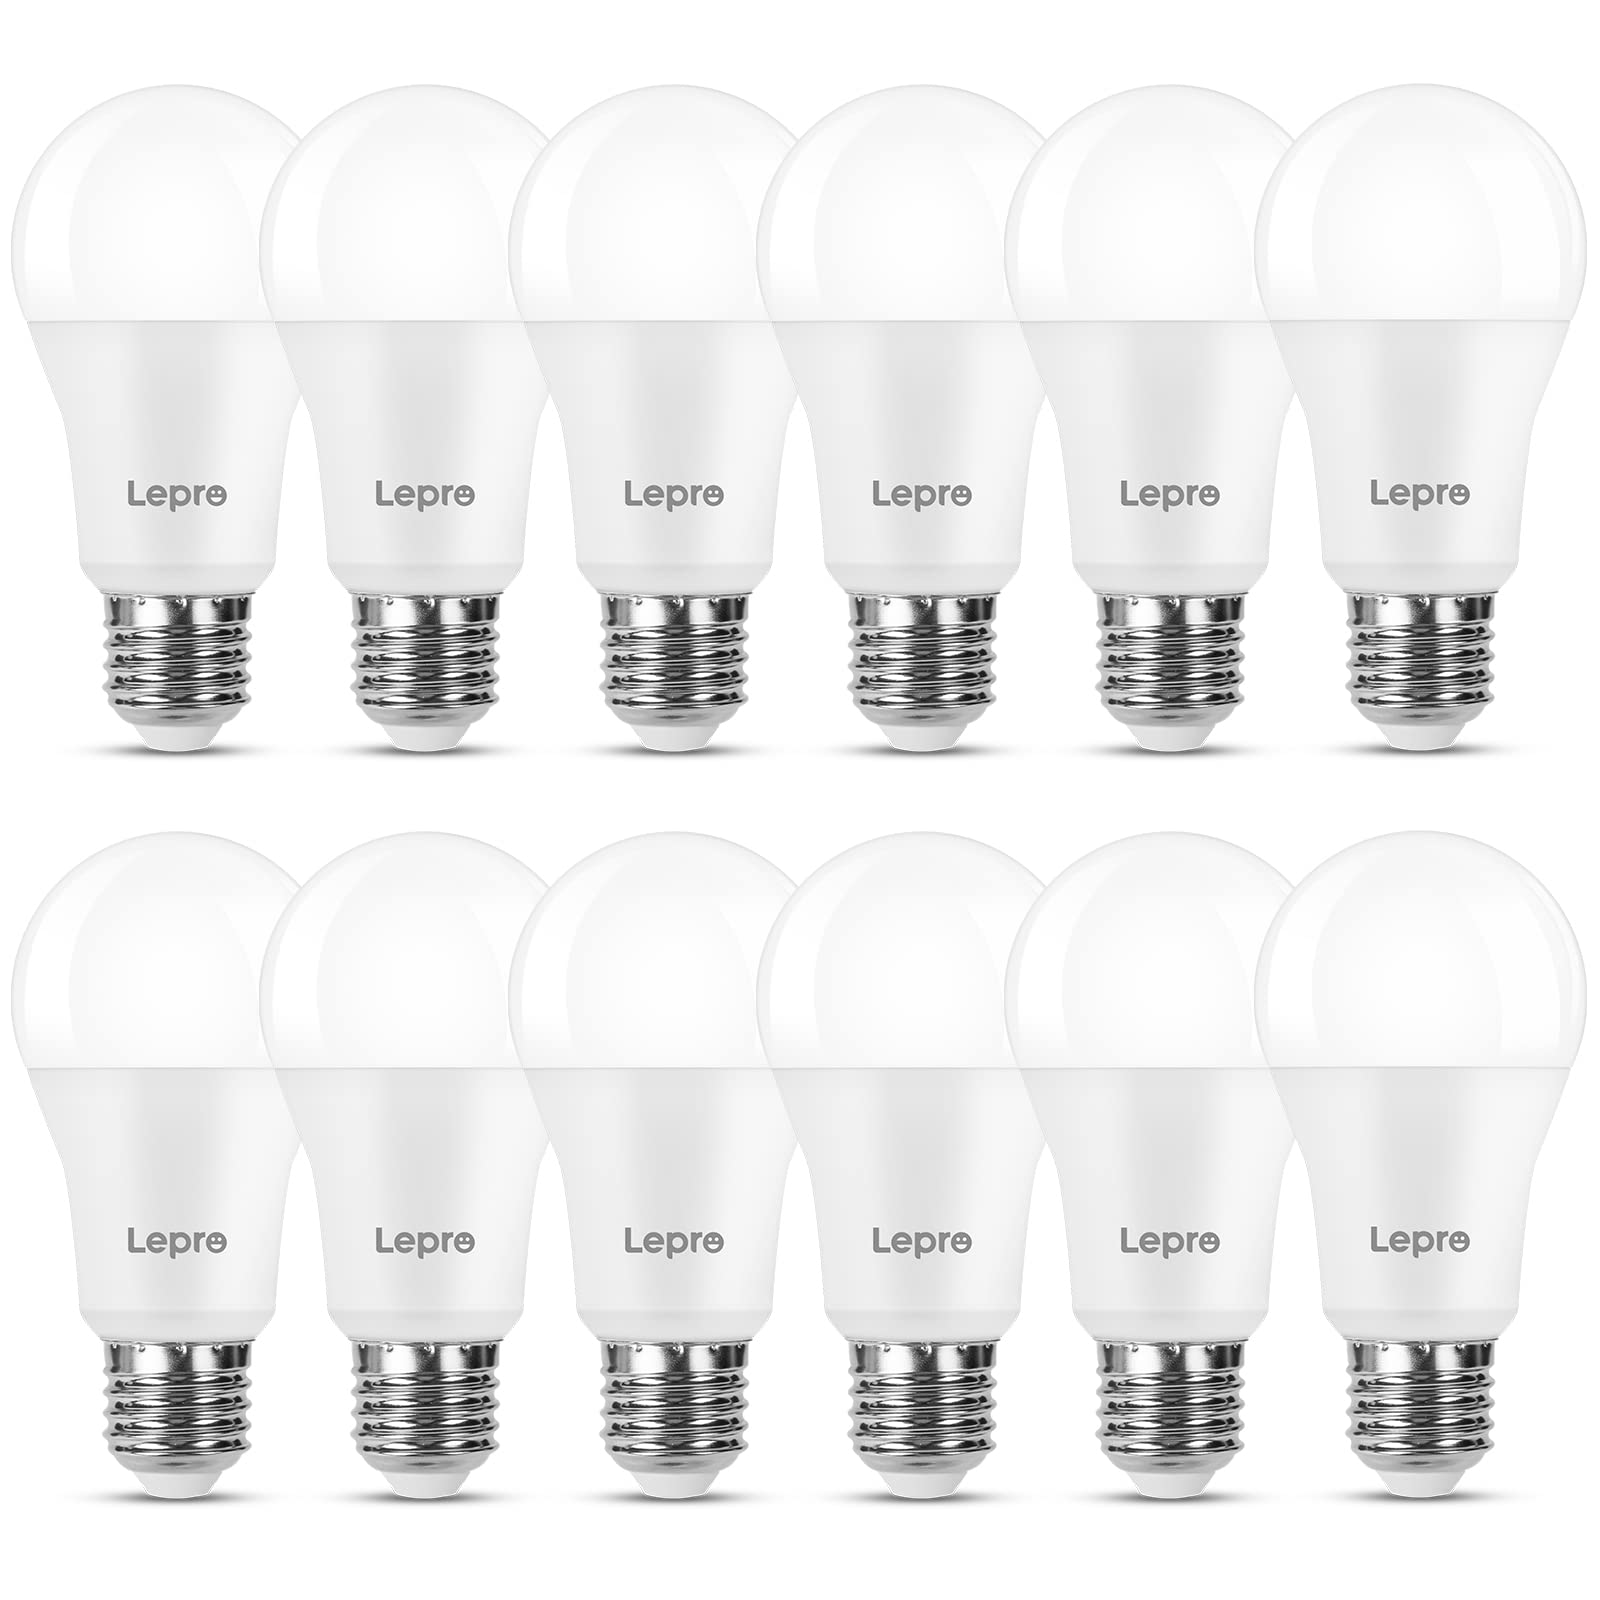 Lepro E27 LED Glühbirne, 13.5 Watt 1521 Lumen LED Lampe E27, ersetzt 100W Halogenlampe A60 Leuchtmittel E27, 2700K Warmweiß LED Bulb, 12er Set, 200° Energiesparlampe